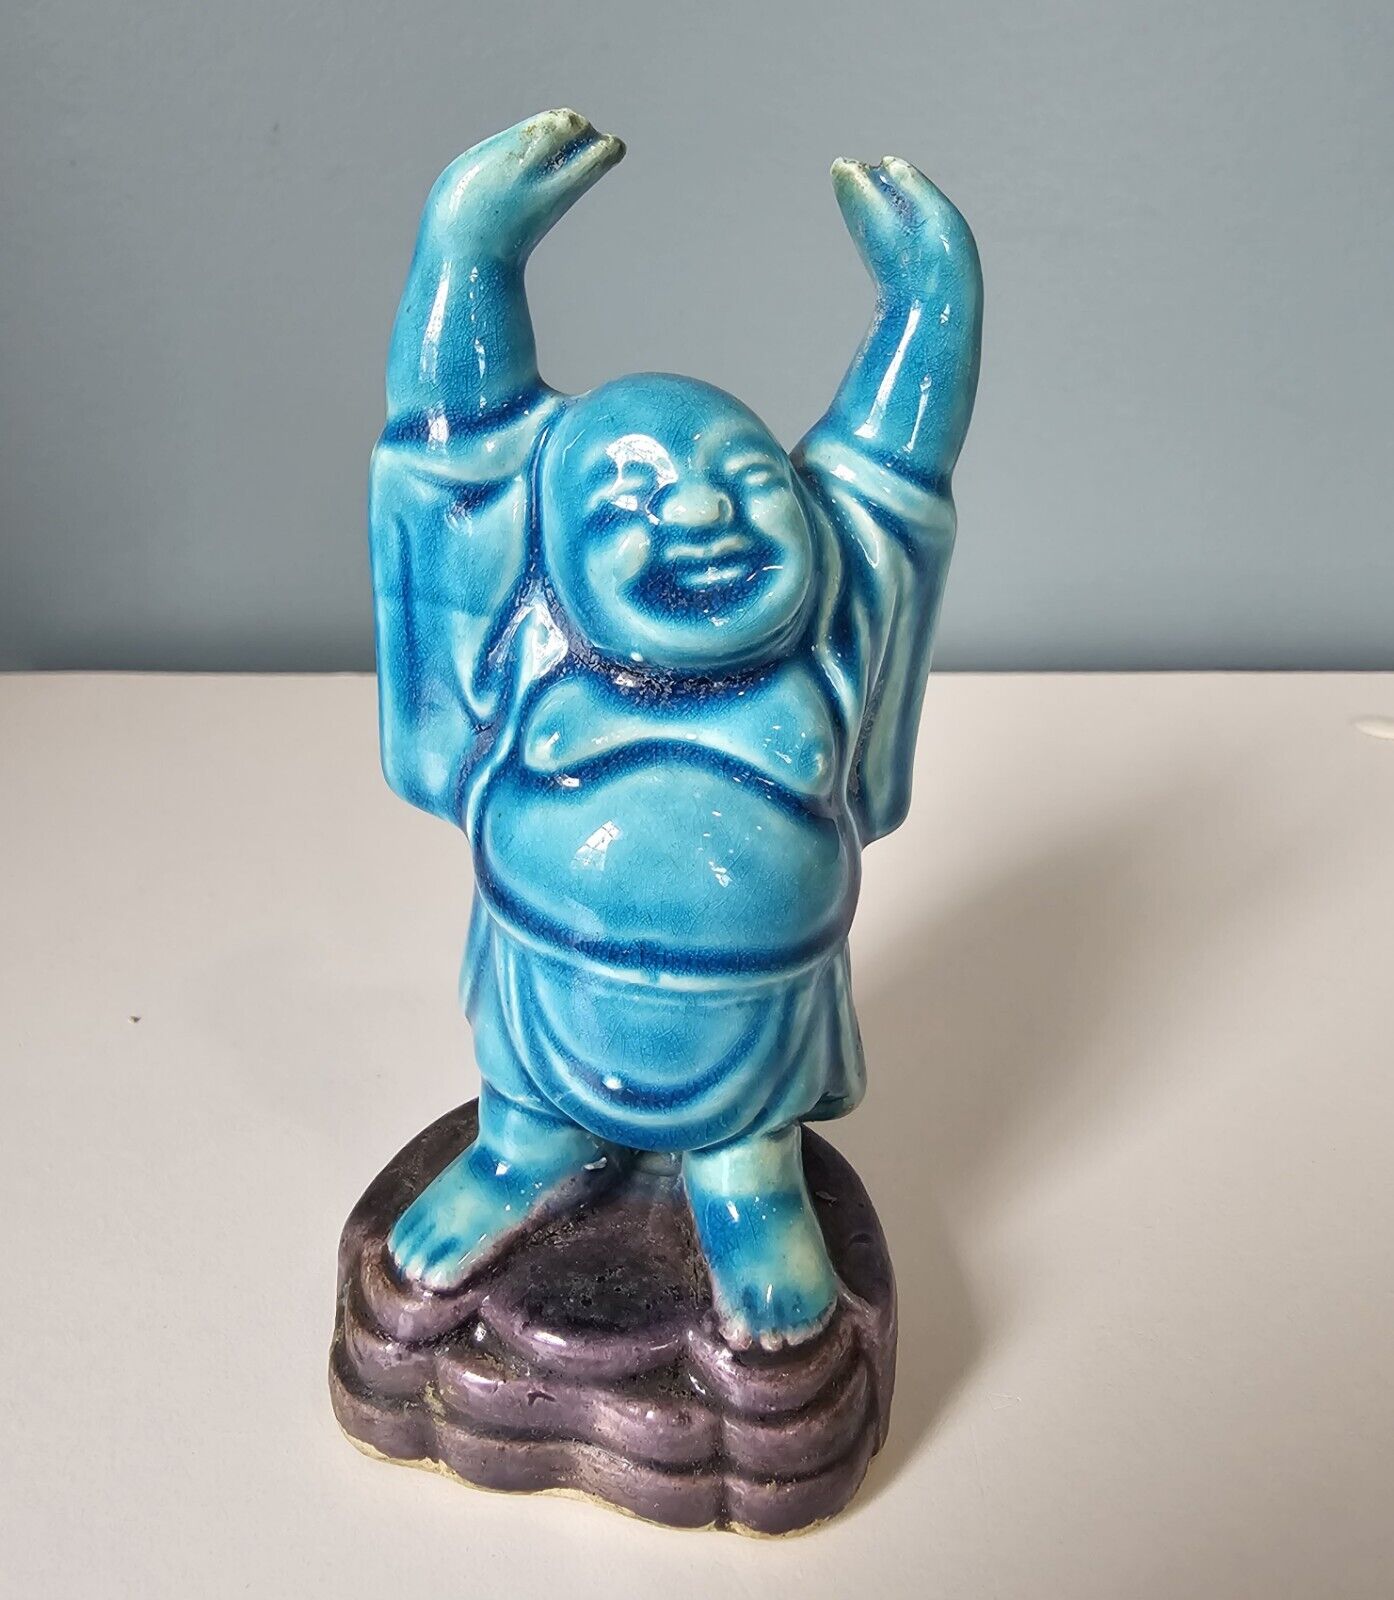 Blue Ceramic Laughing Buddha Figurine 4” Tall Japan